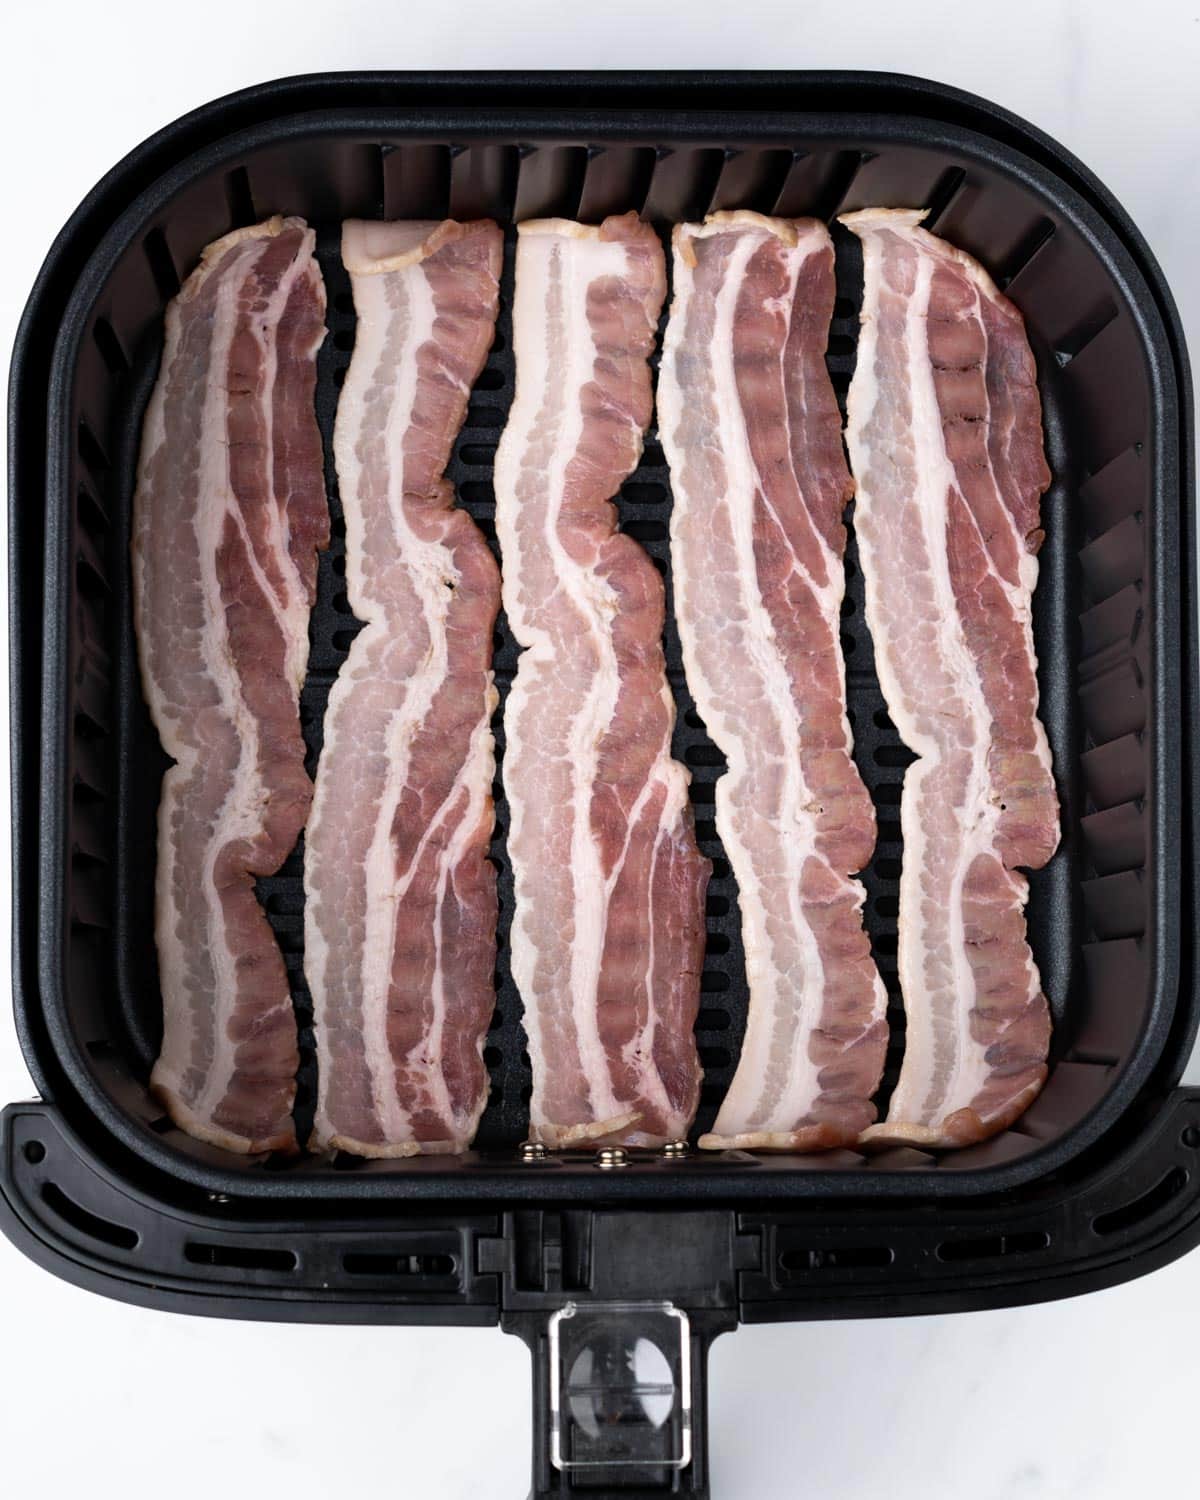 Bacon in an air fryer basket.